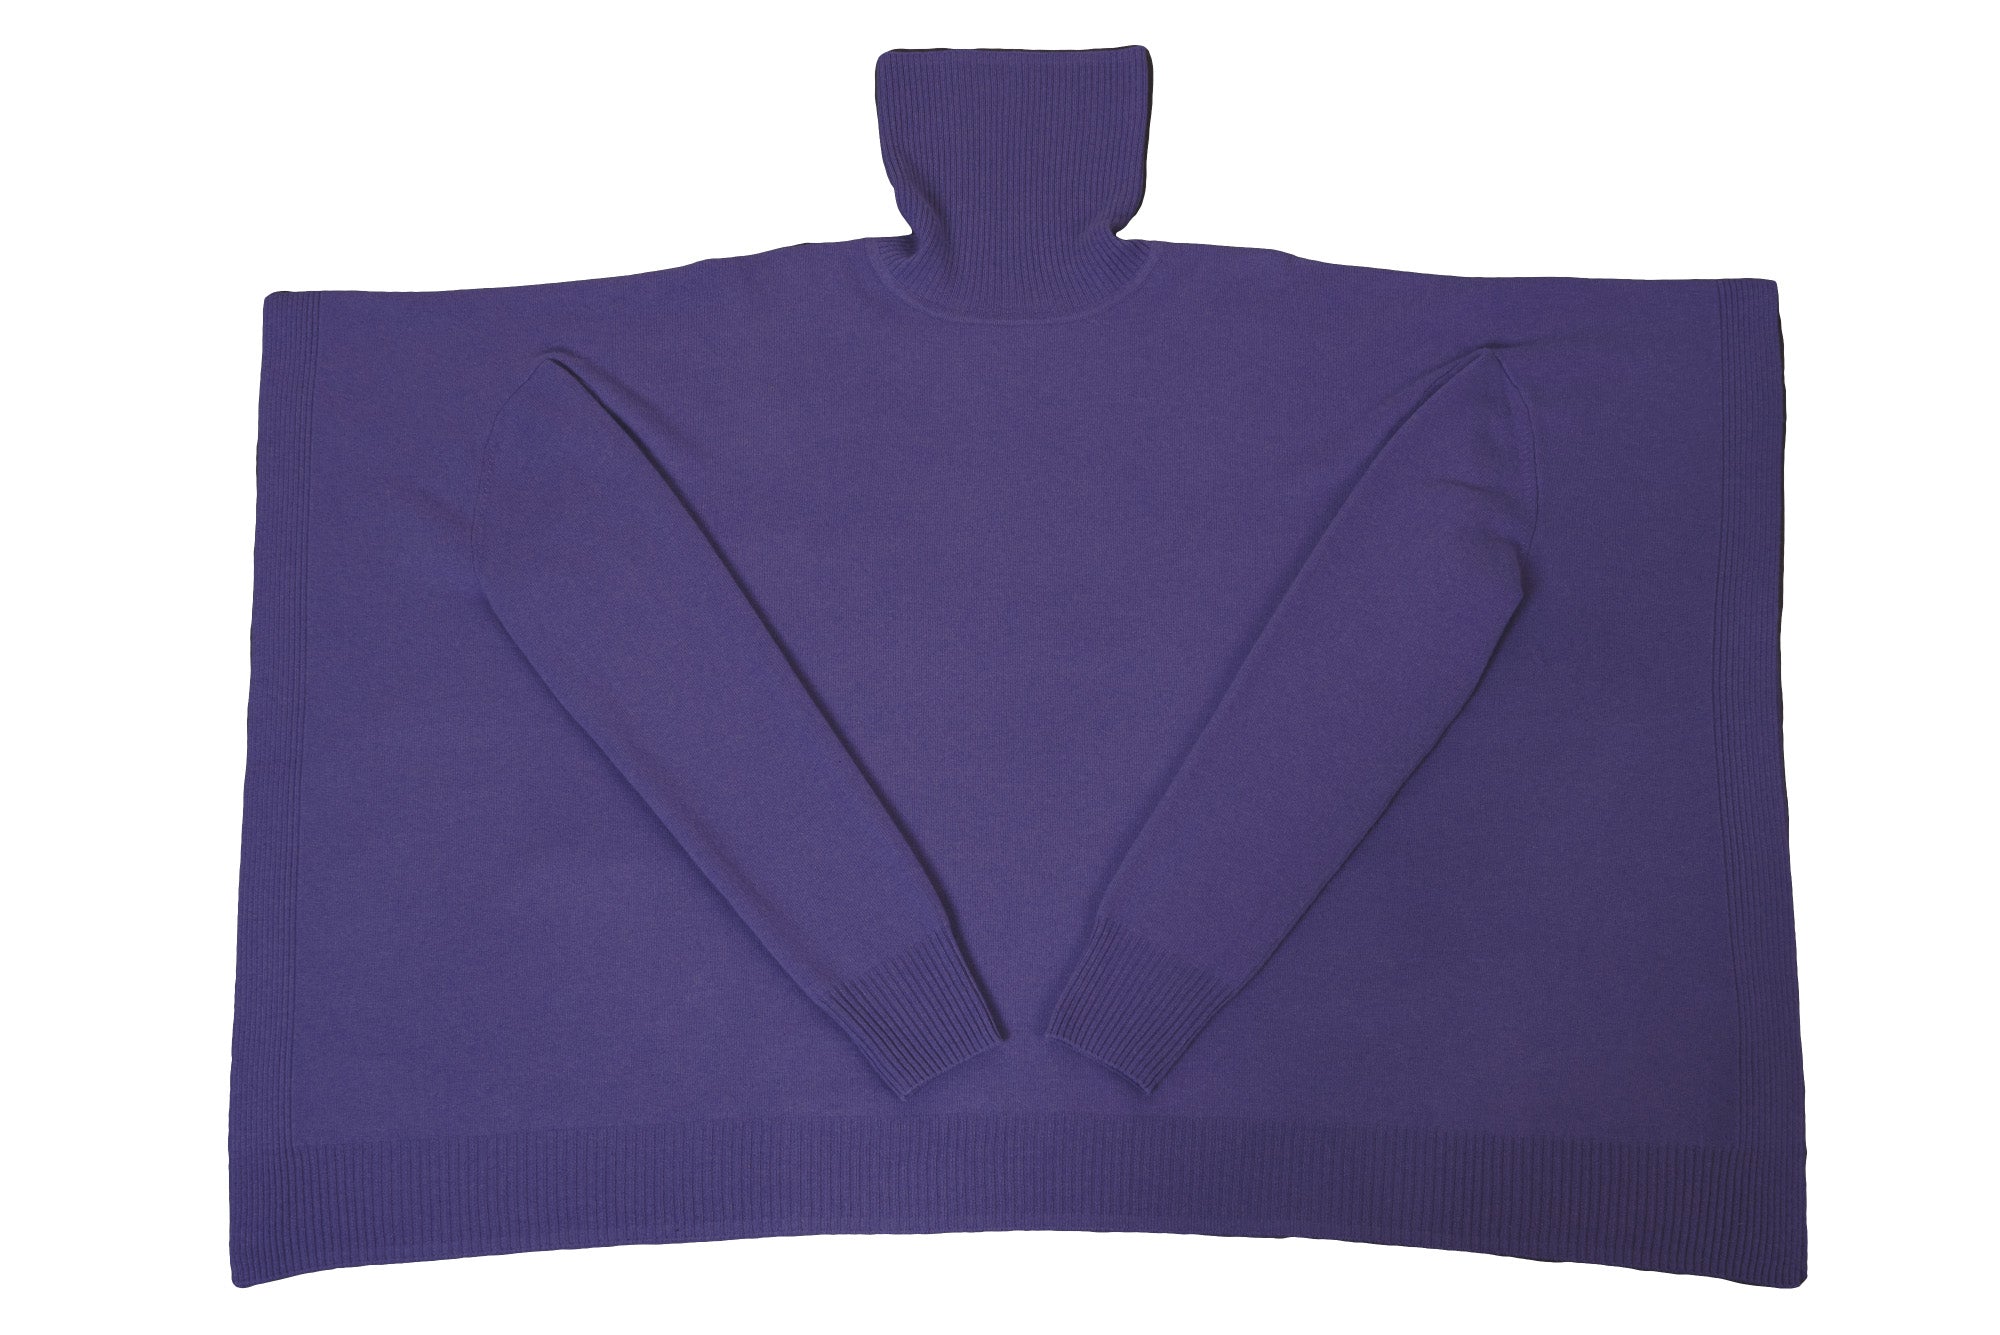 Cashmere Knit Poncho Top | Indigo – MYLAN ONLINE SHOP